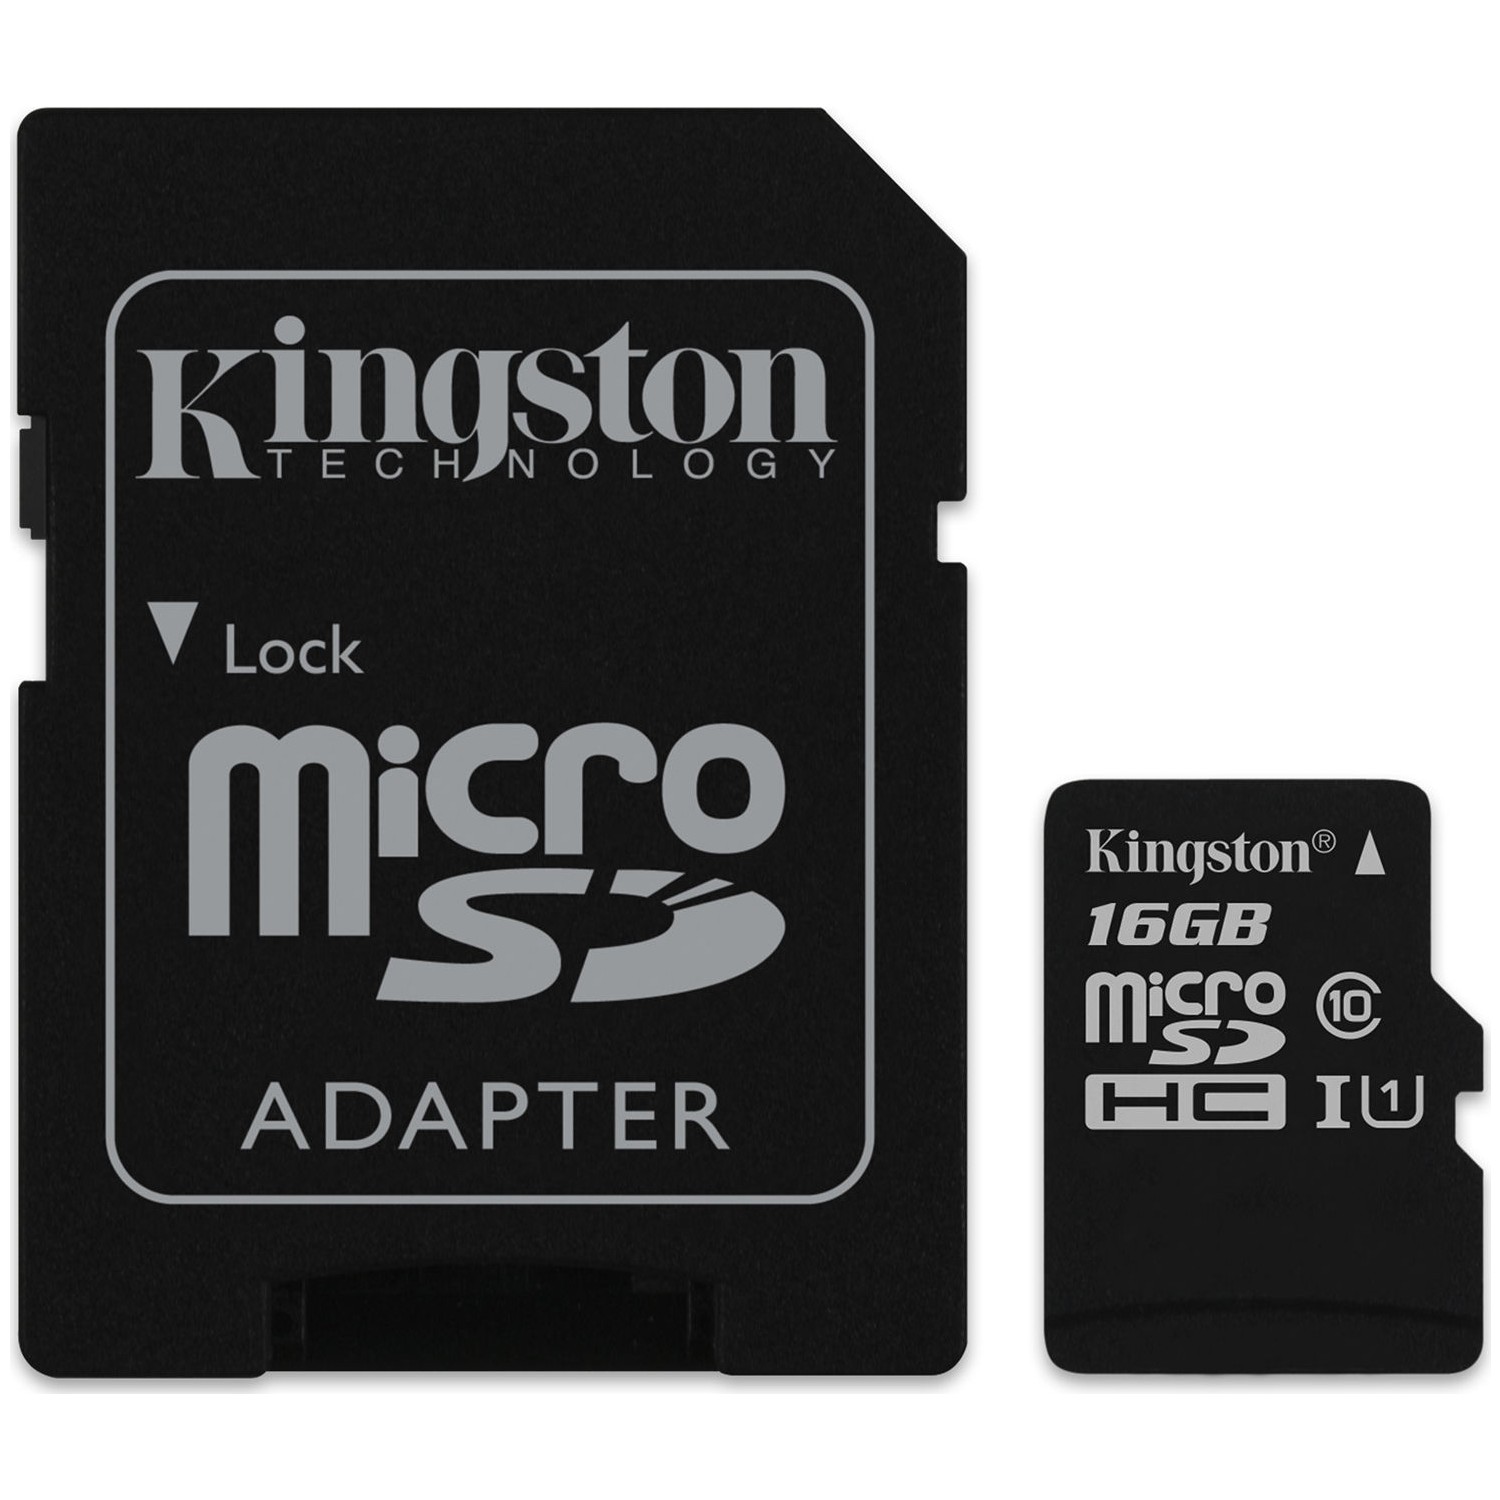  Kingston 16 GB MicroSD Hafıza Kartı